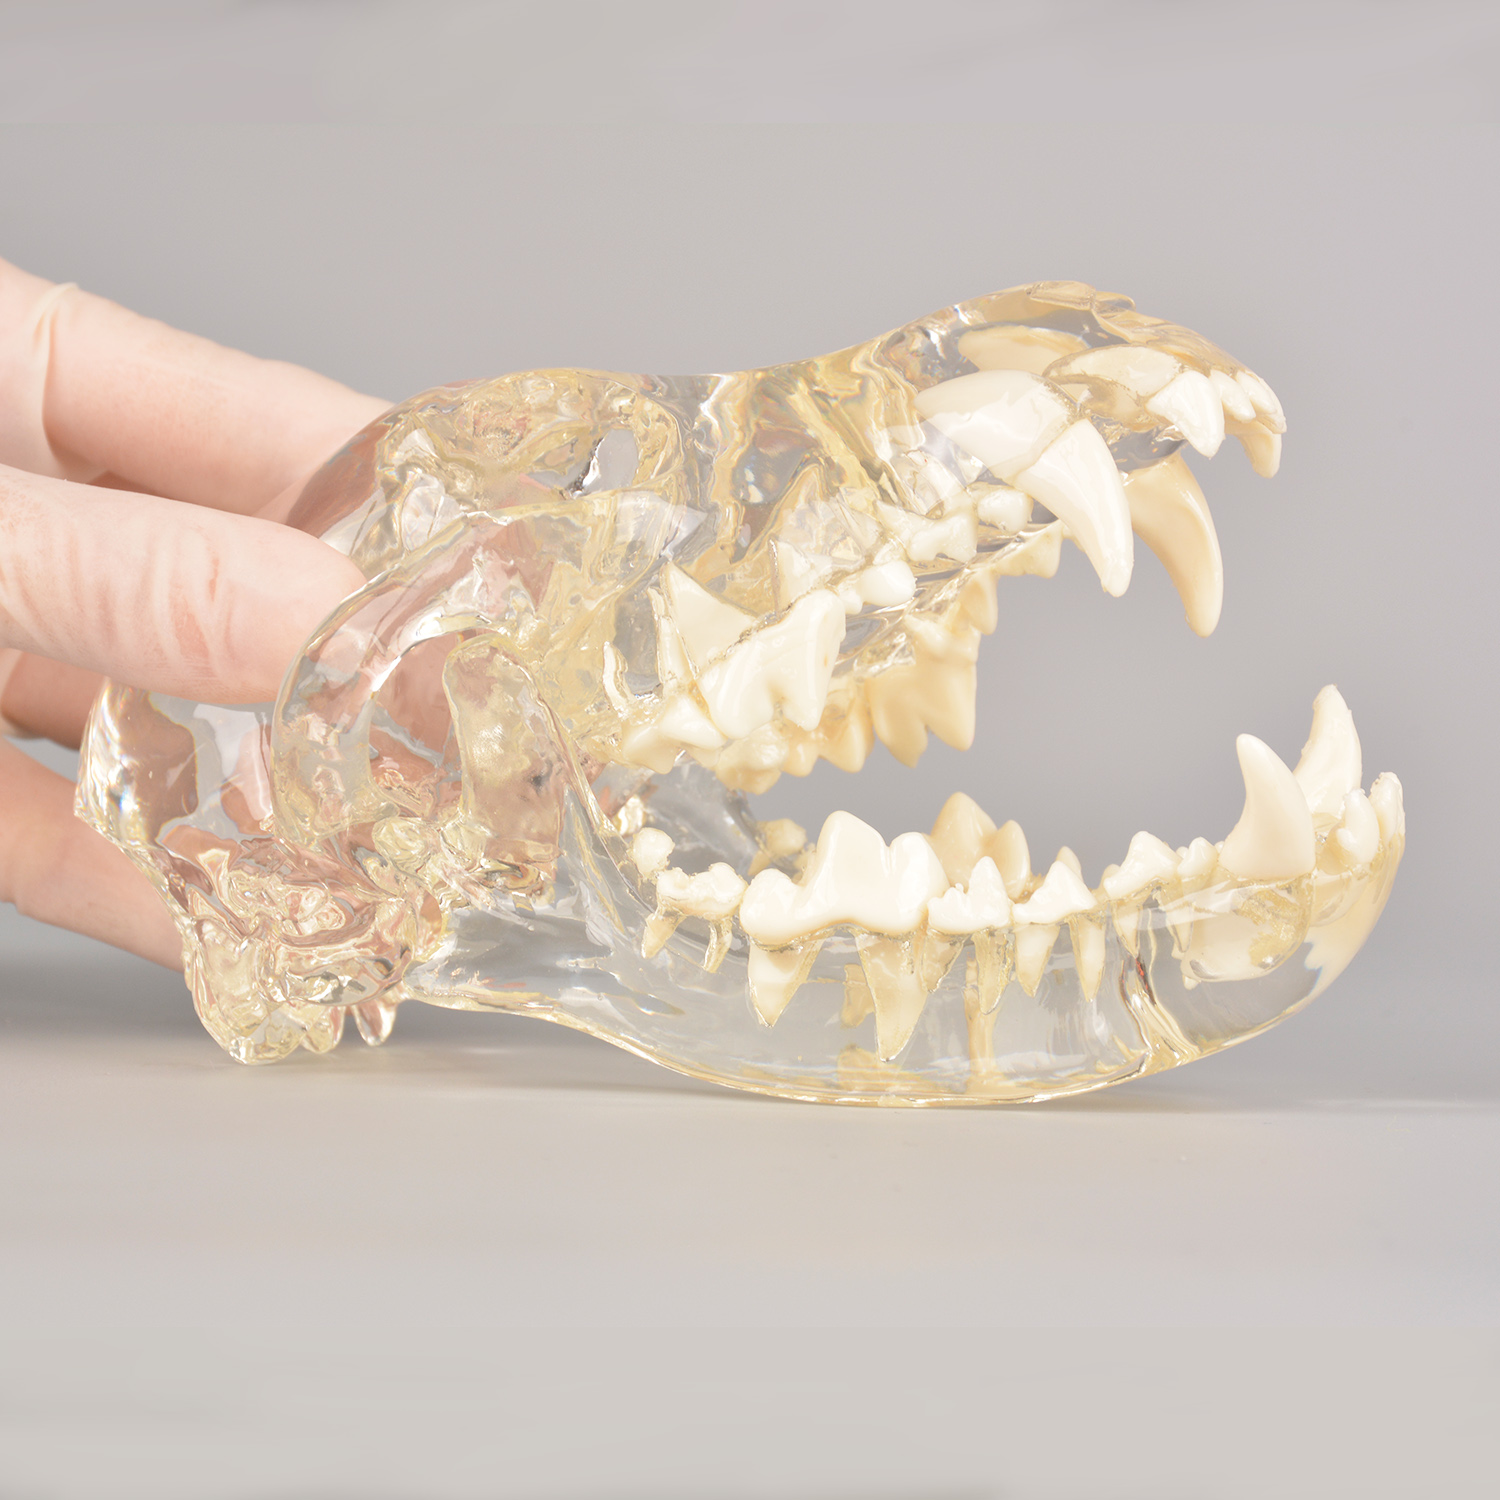 Canine Skull Dentoform Dental Model w/o Radiopaque Teeth